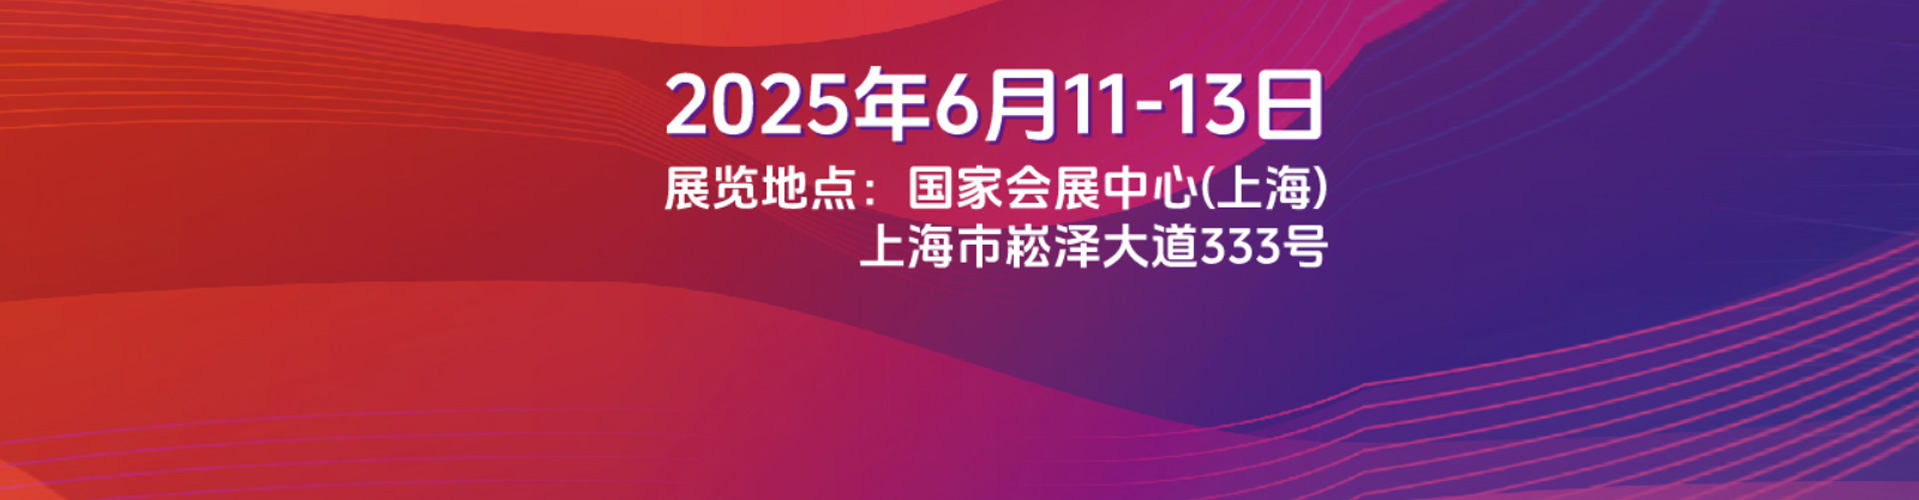 SNEC*十四届 2020国际太阳能光伏与智慧能源 上海 大会暨展览会